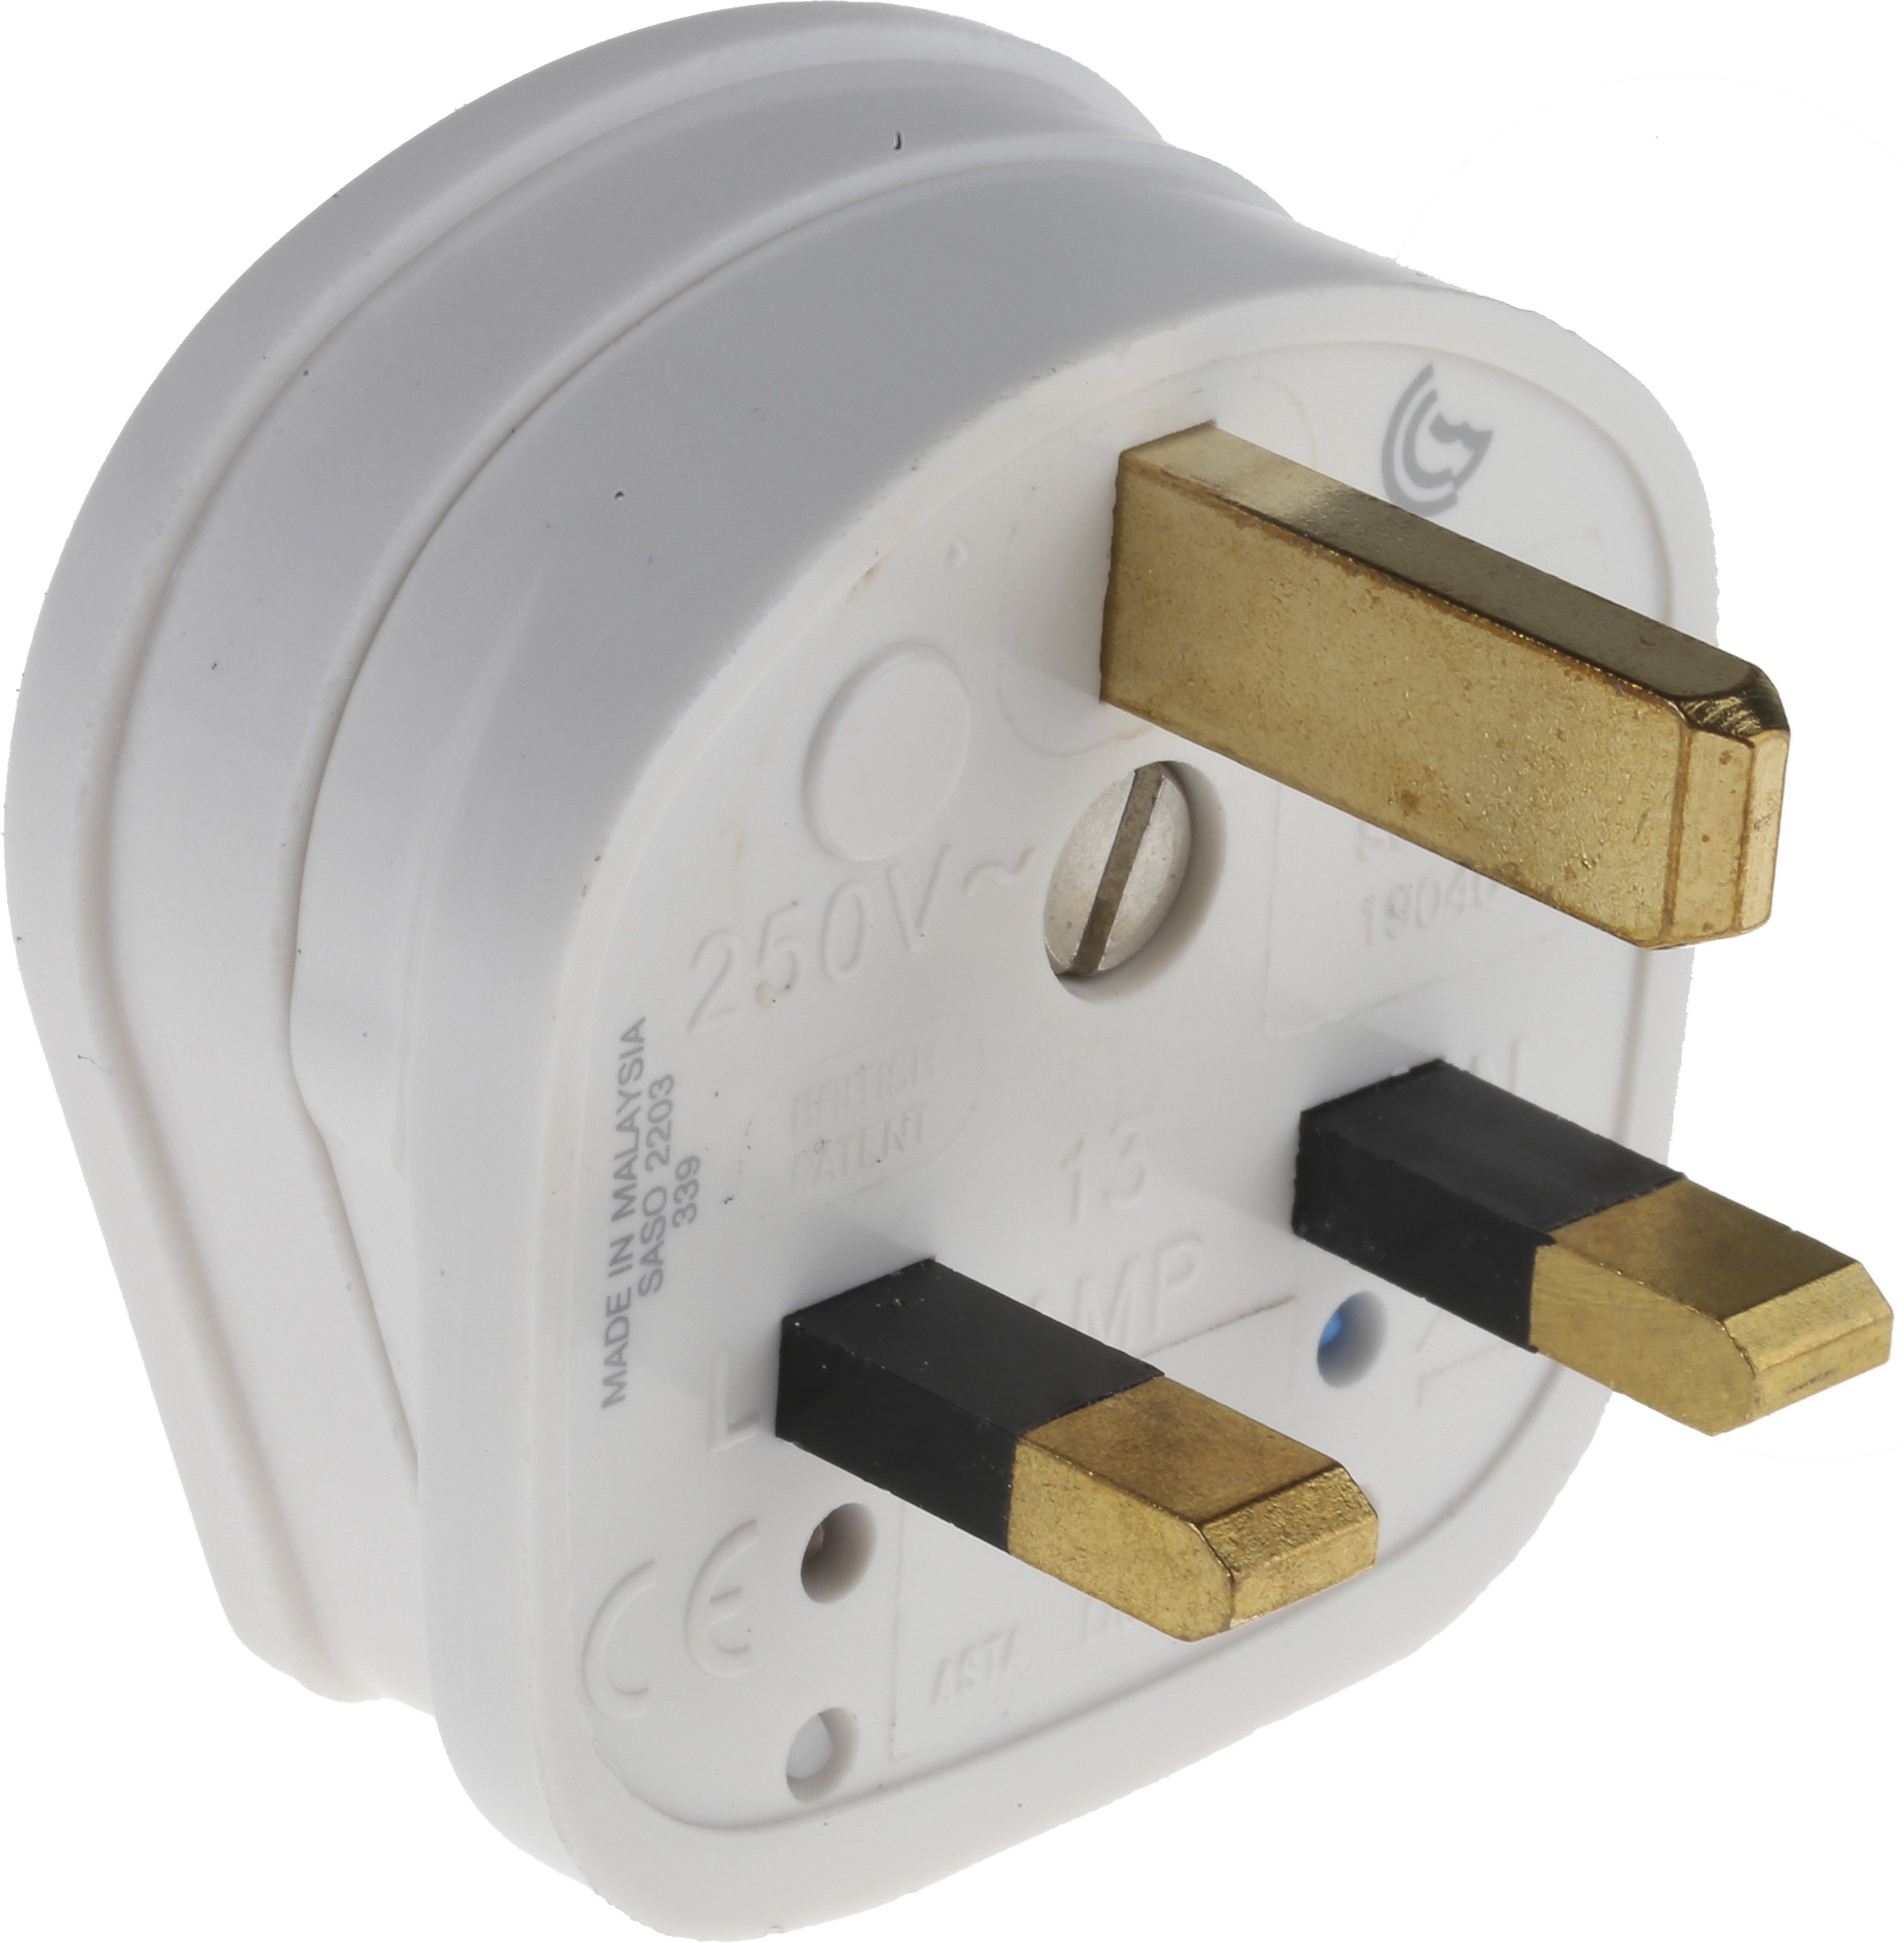 MK Electric UK Mains Plug, 13A, Cable Mount, 240 V